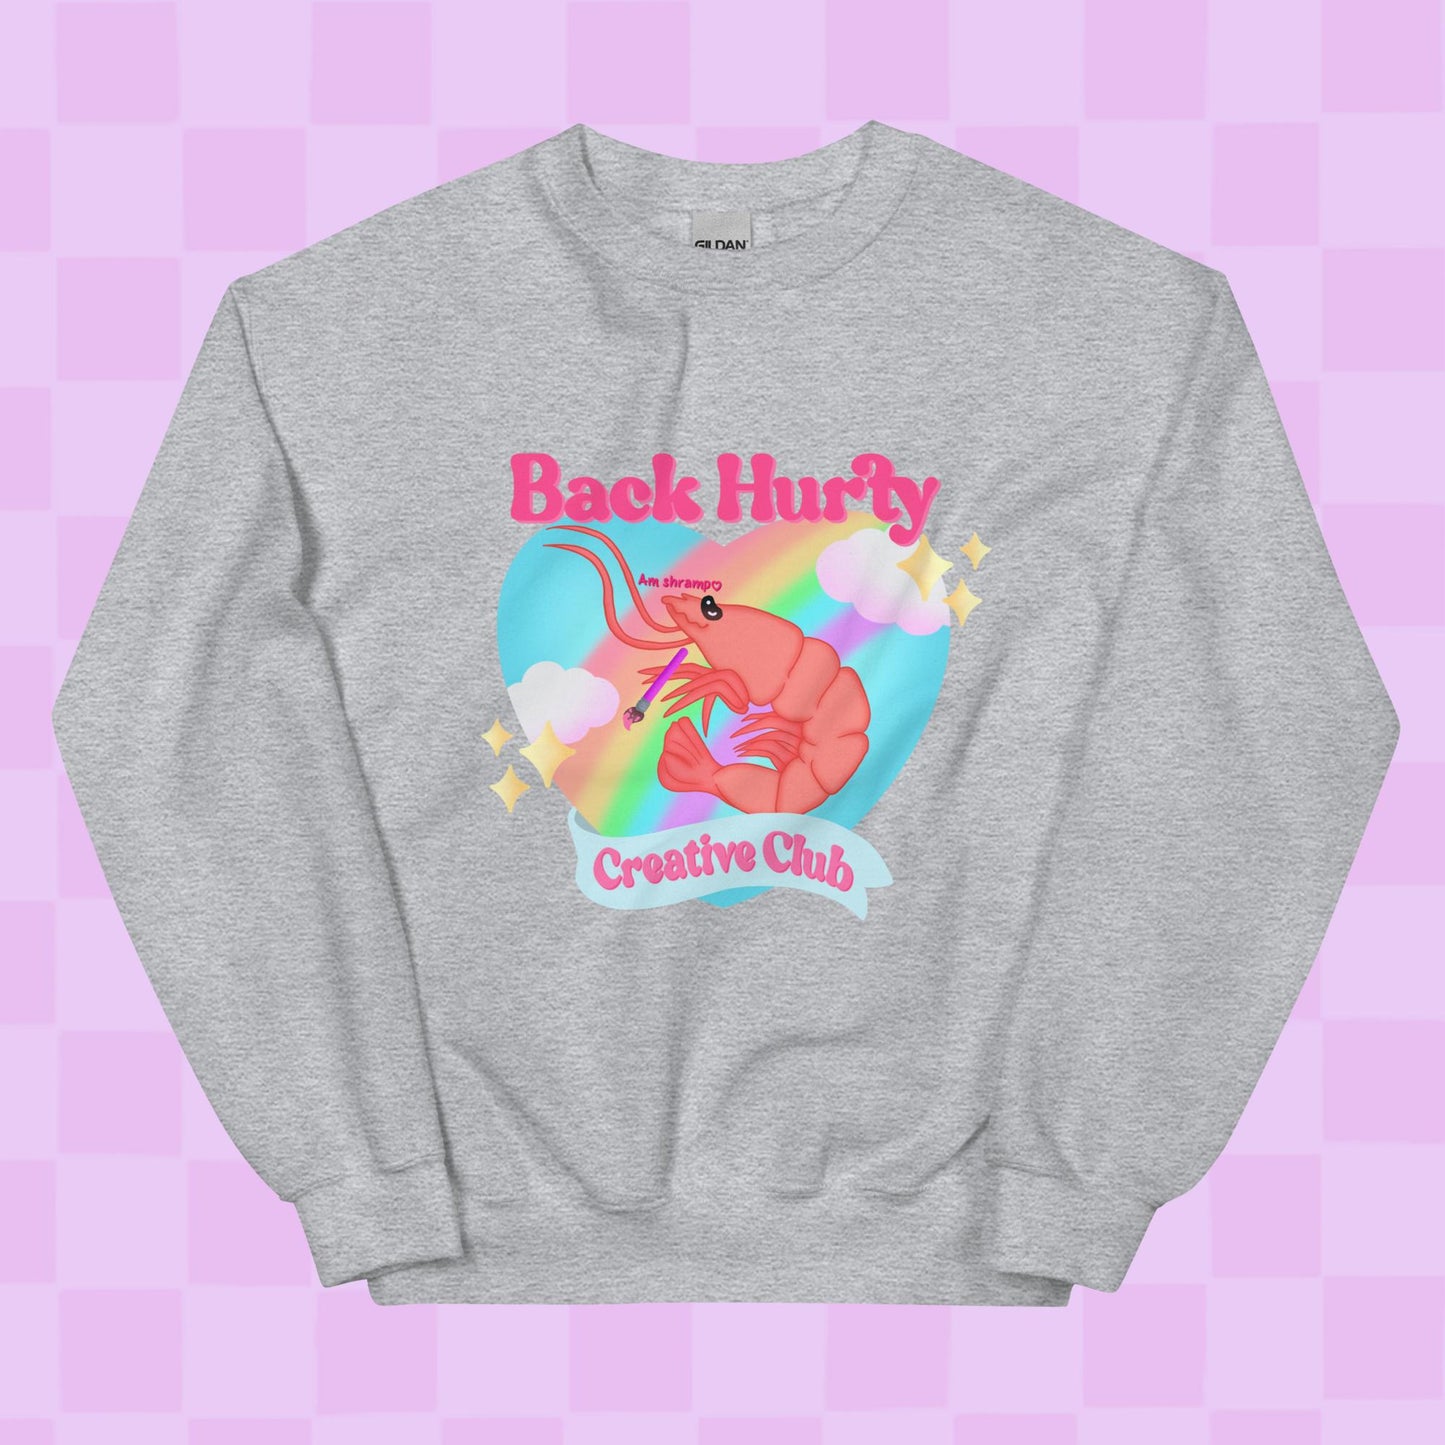 Back hurty creative club unisex sweatshirt